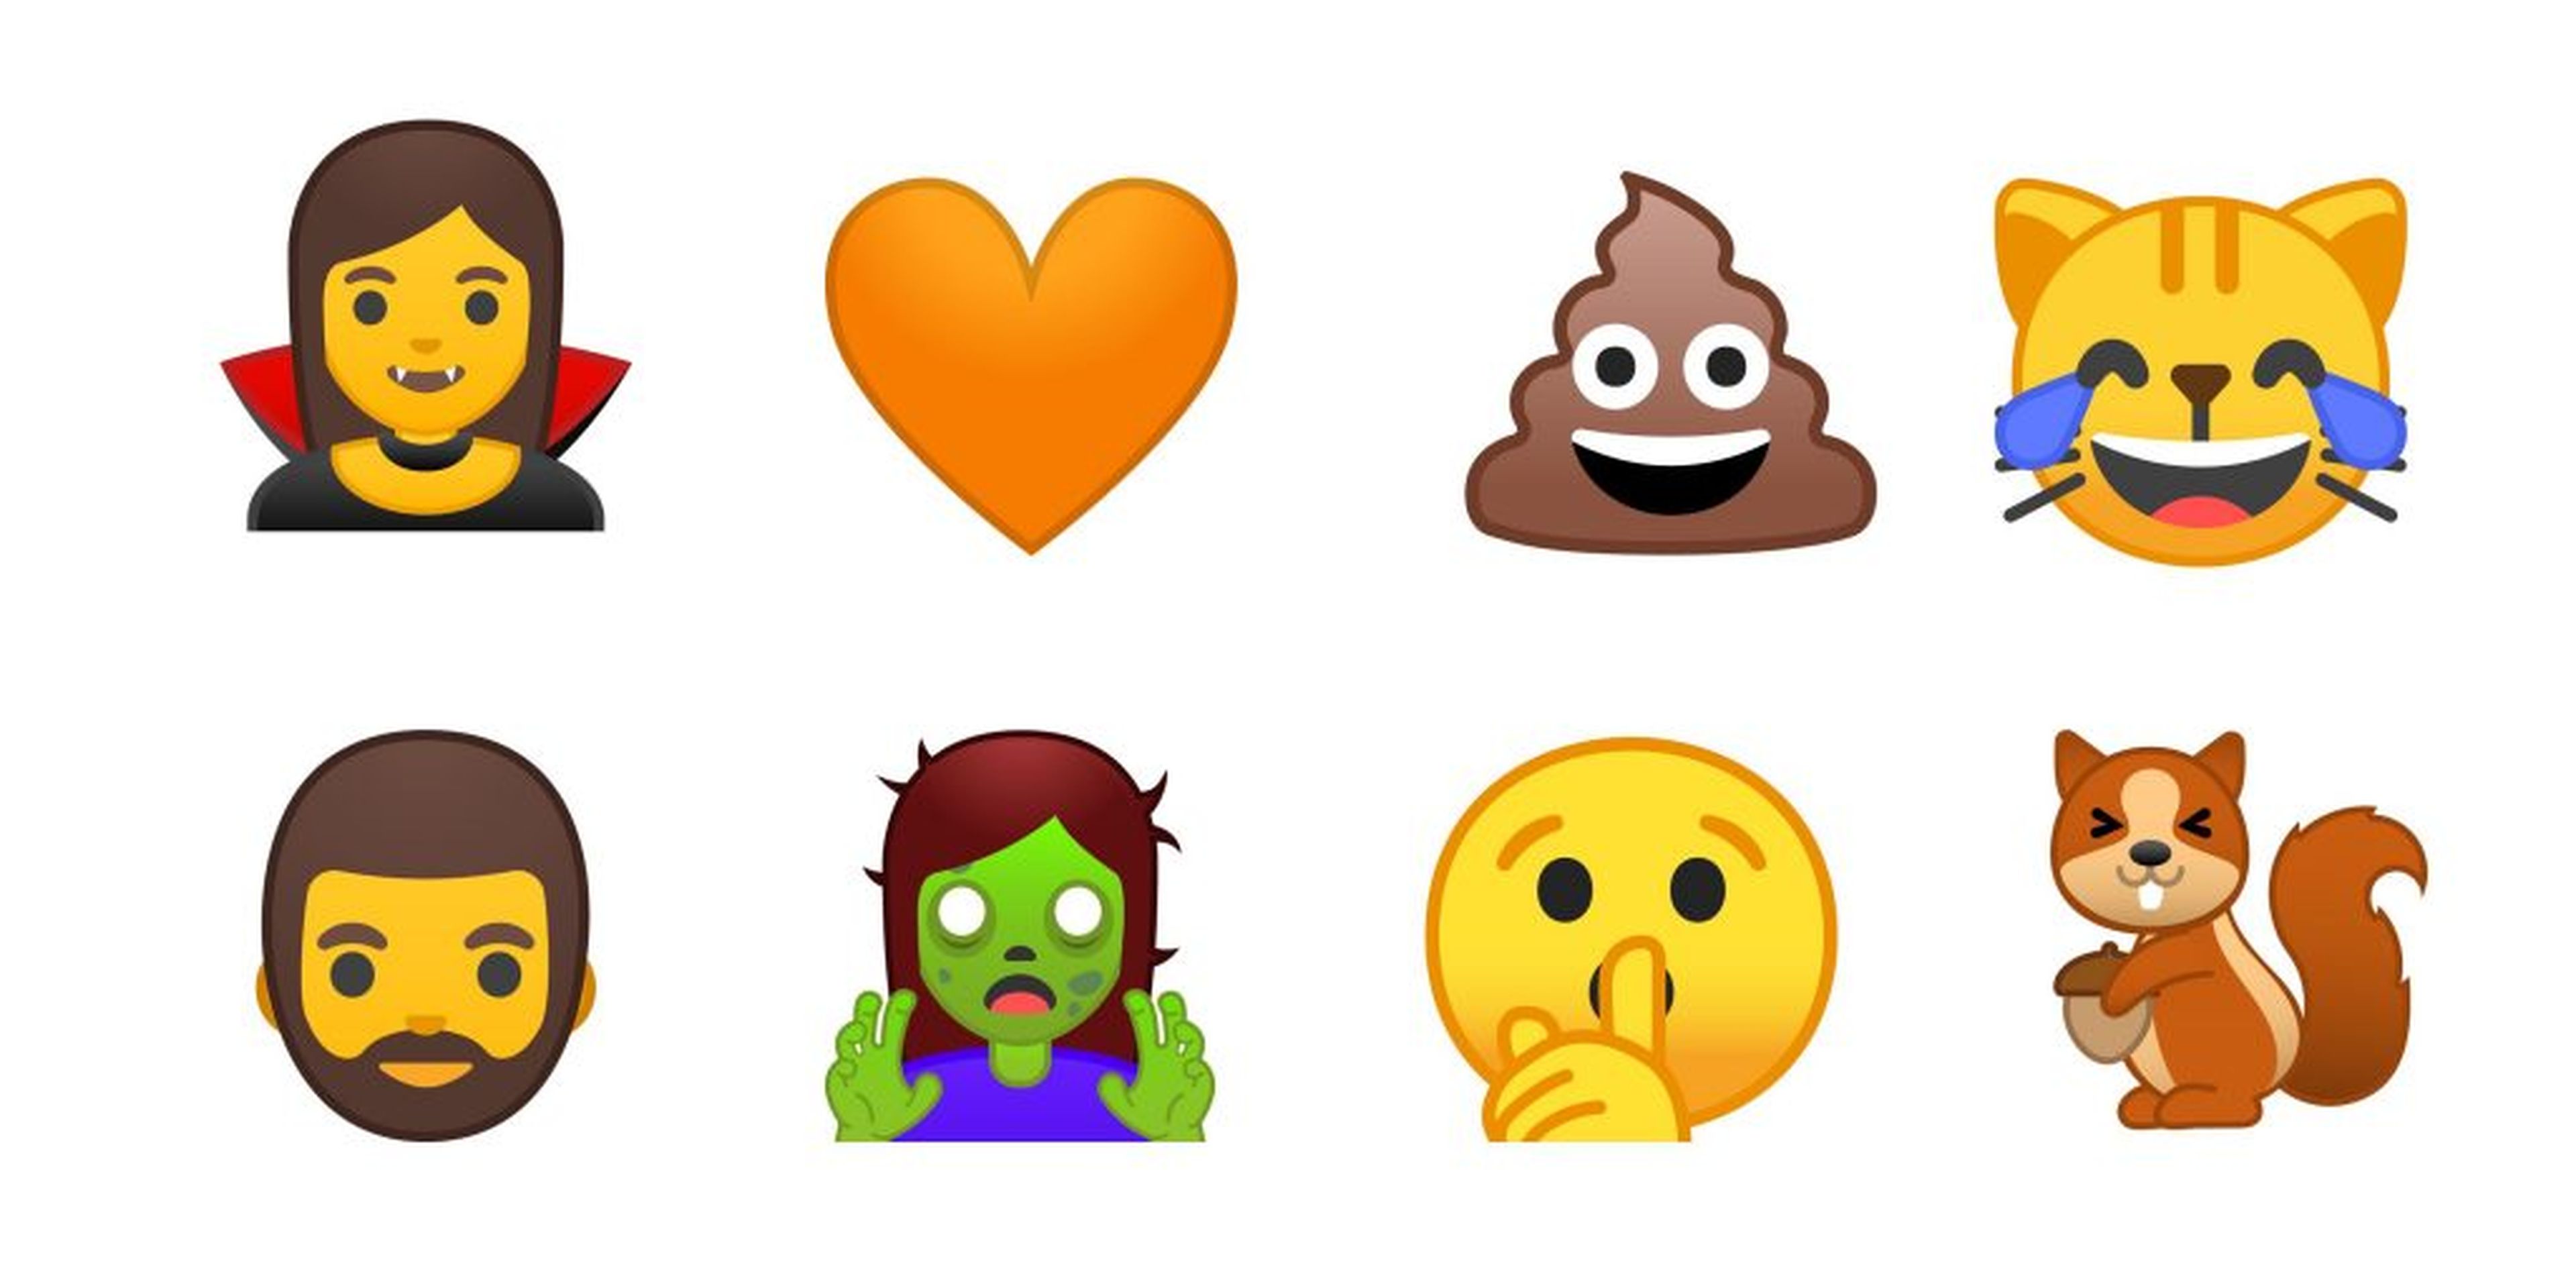 Google rediseña sus emojis para Android O